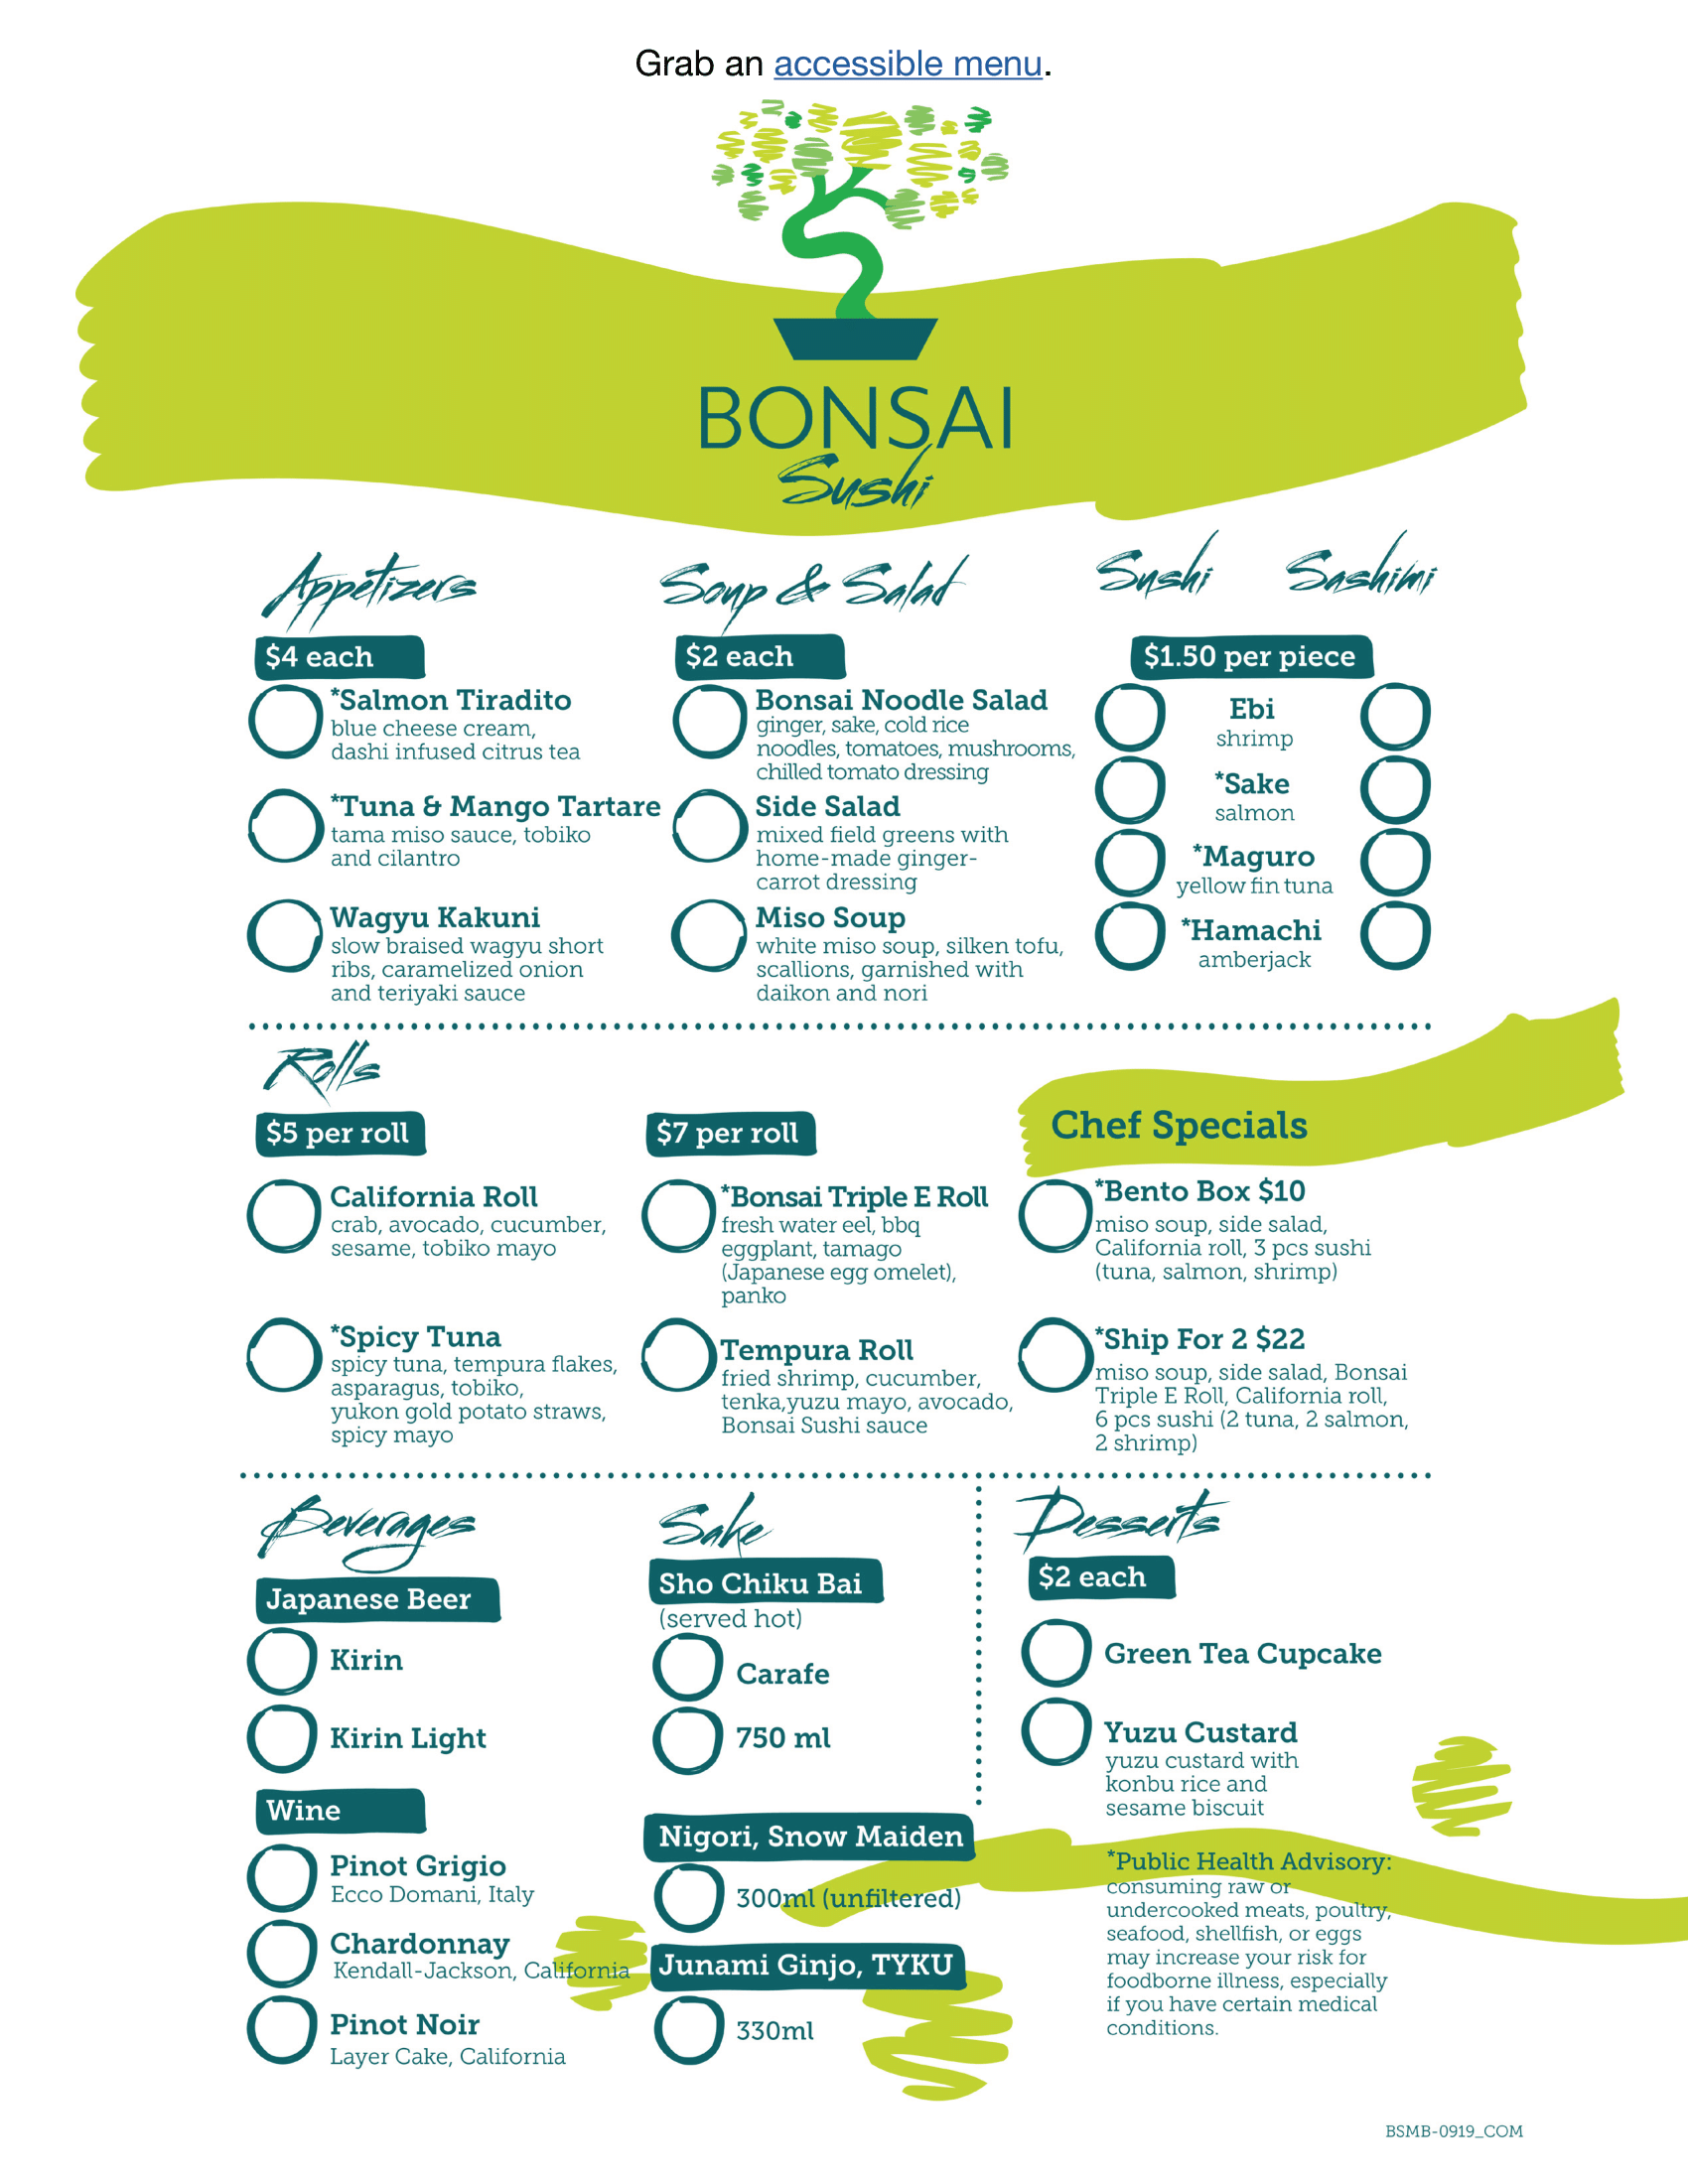 Carnival Bonsai Sushi lunch and dinner menu